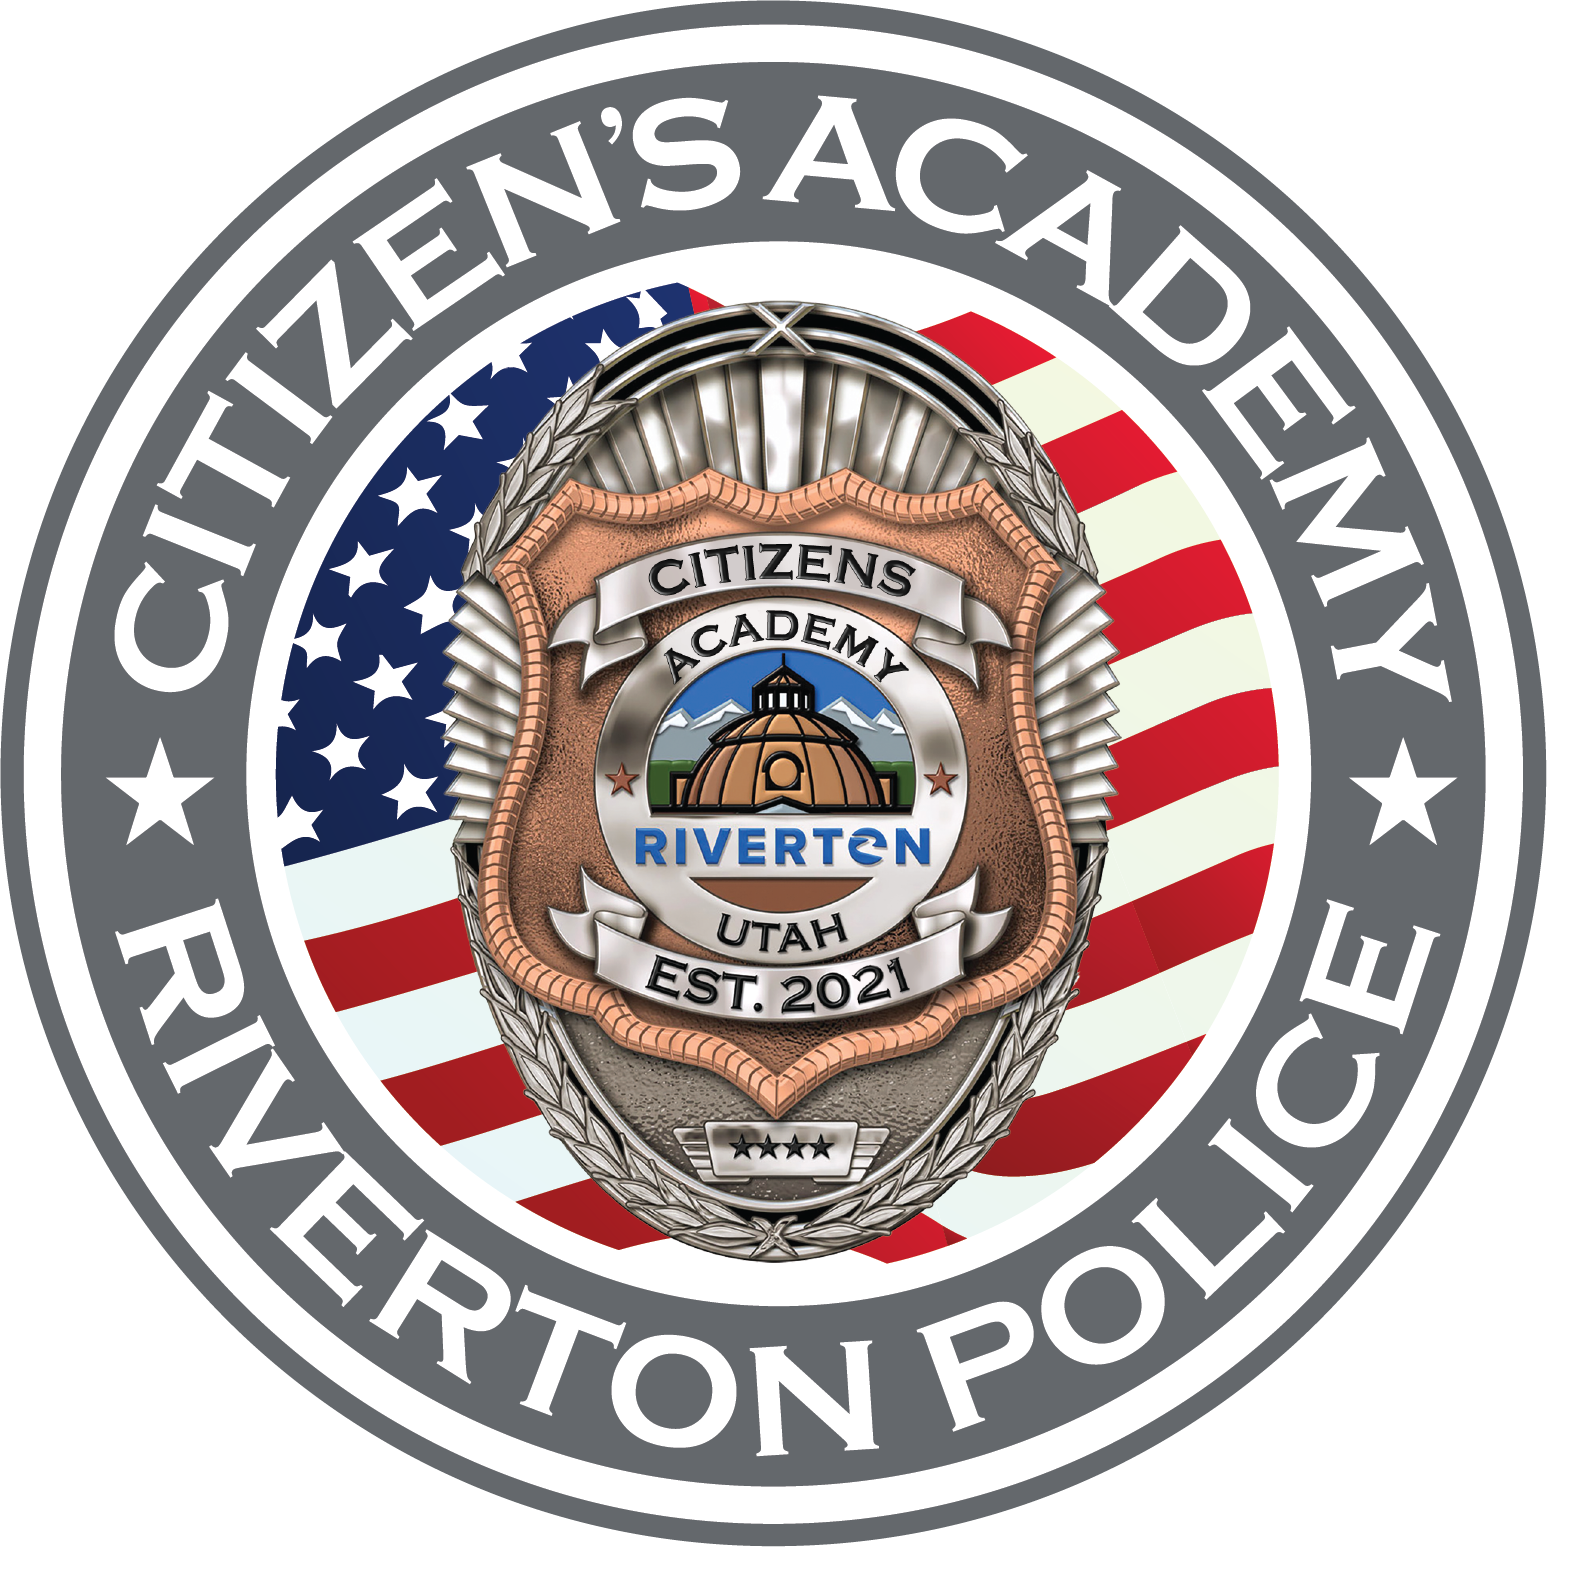 Riverton Citizen's Academy